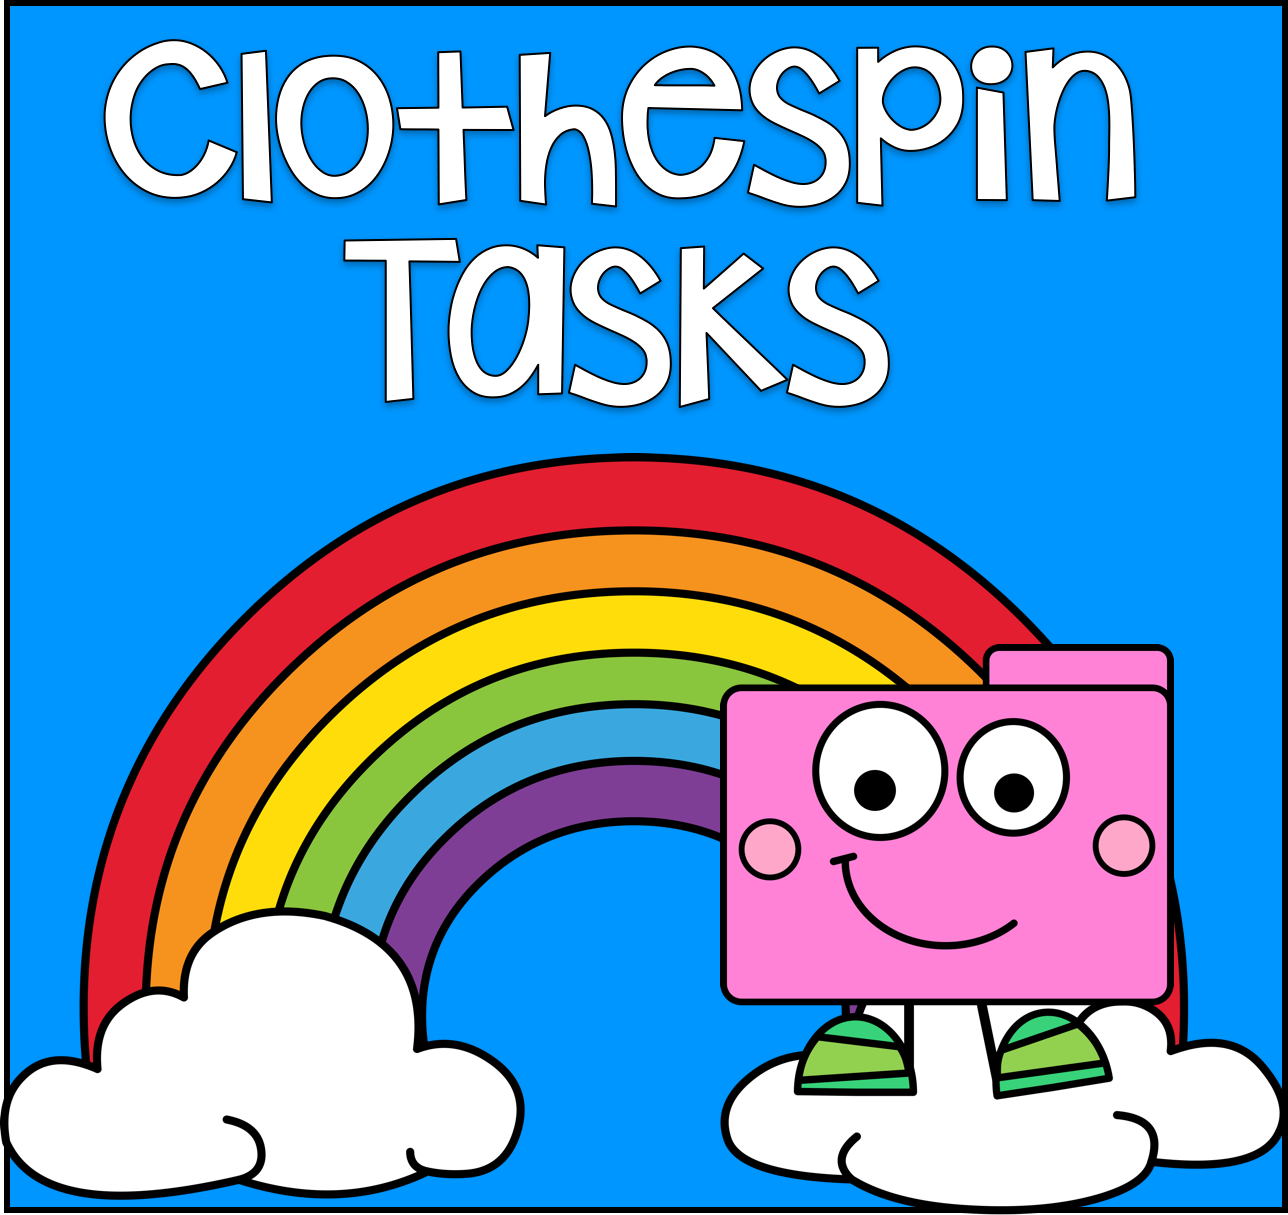 Clothespin Tasks